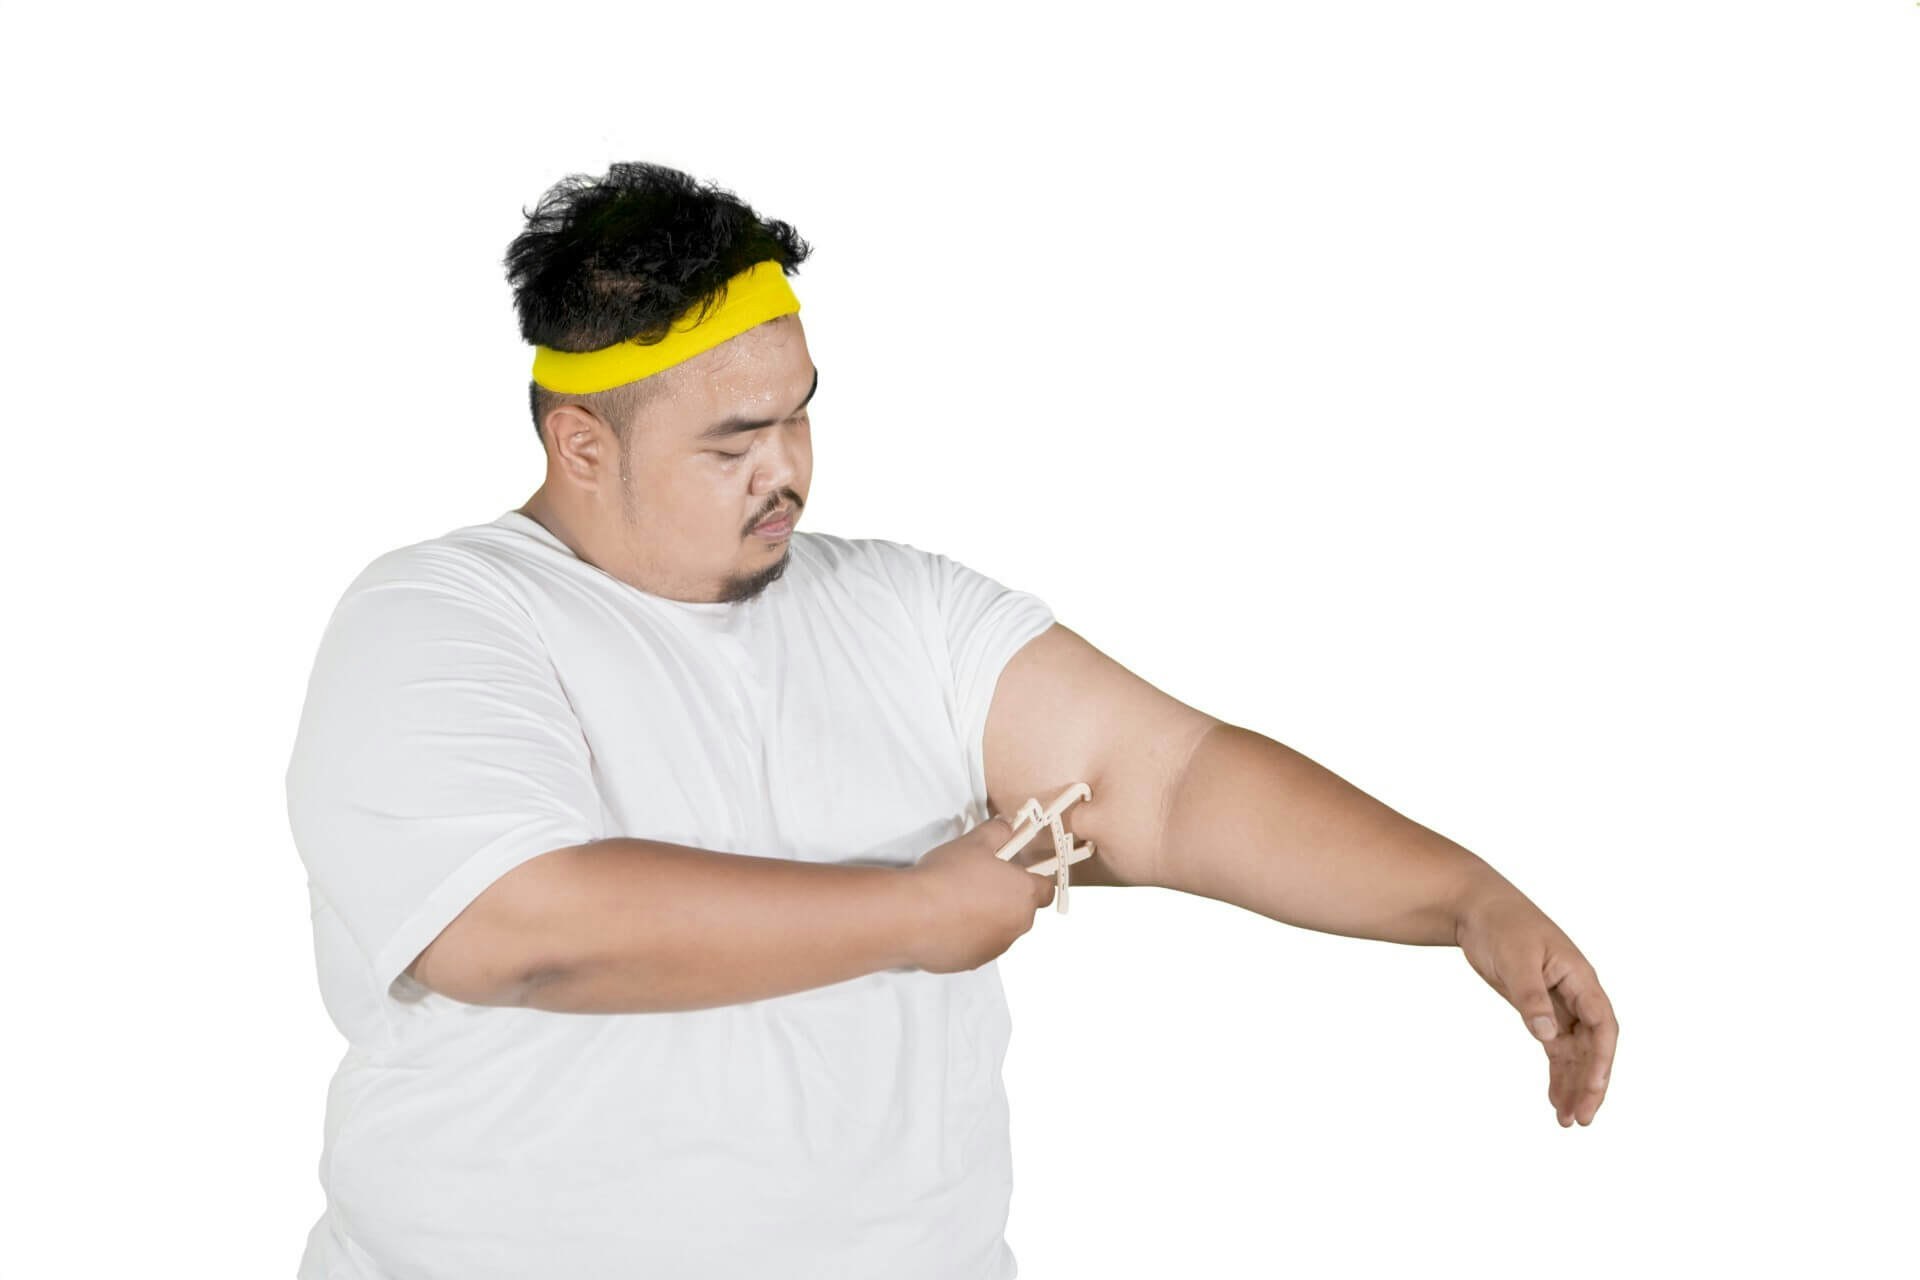 Fat guy pinching his arm